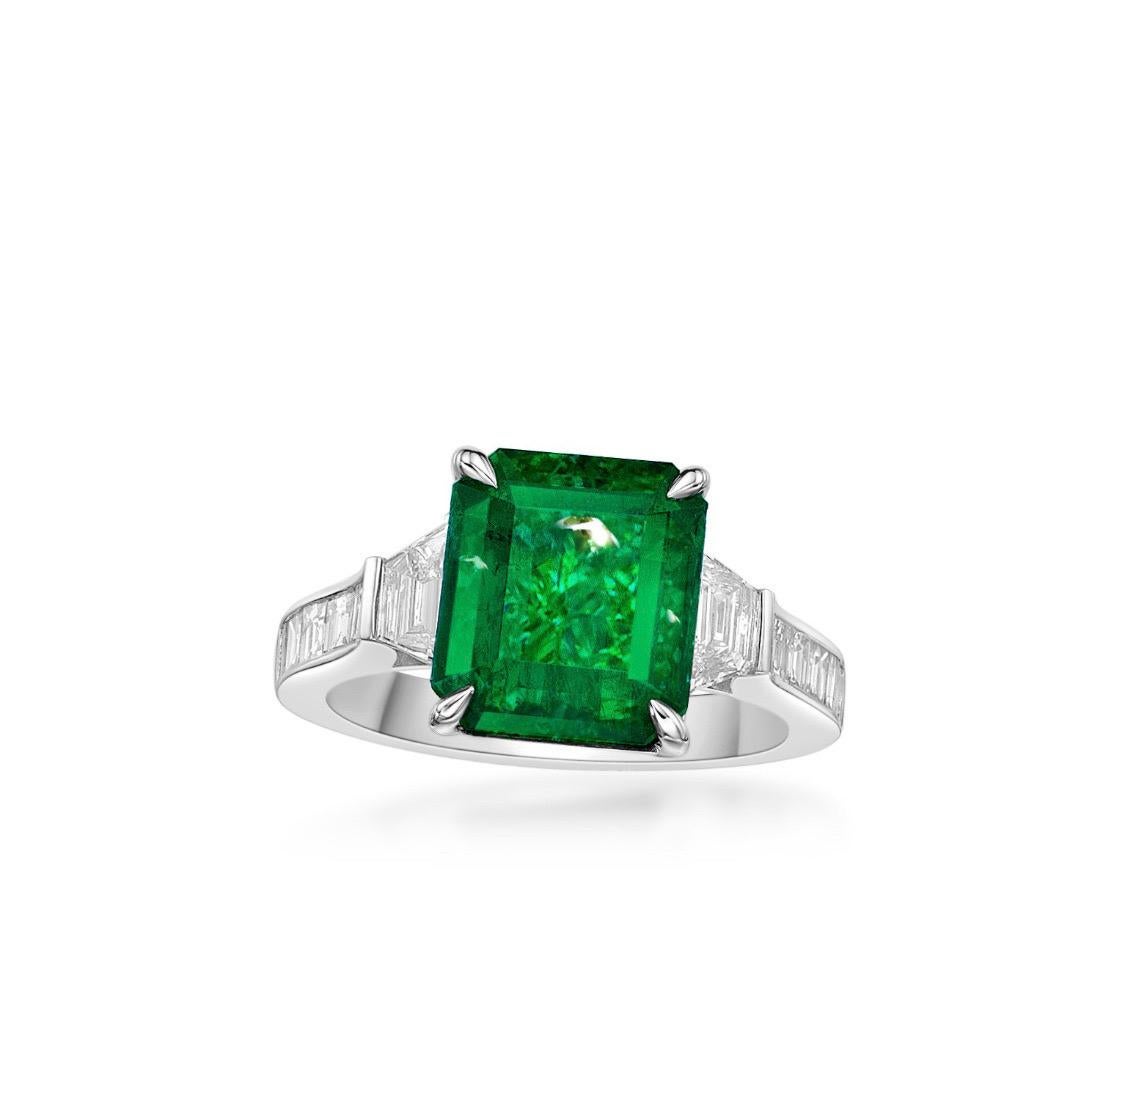 Emerald Cut Emilio Jewelry Certified 5.94 Carat Vivid Green Muzo Colombian Emerald Ring  For Sale